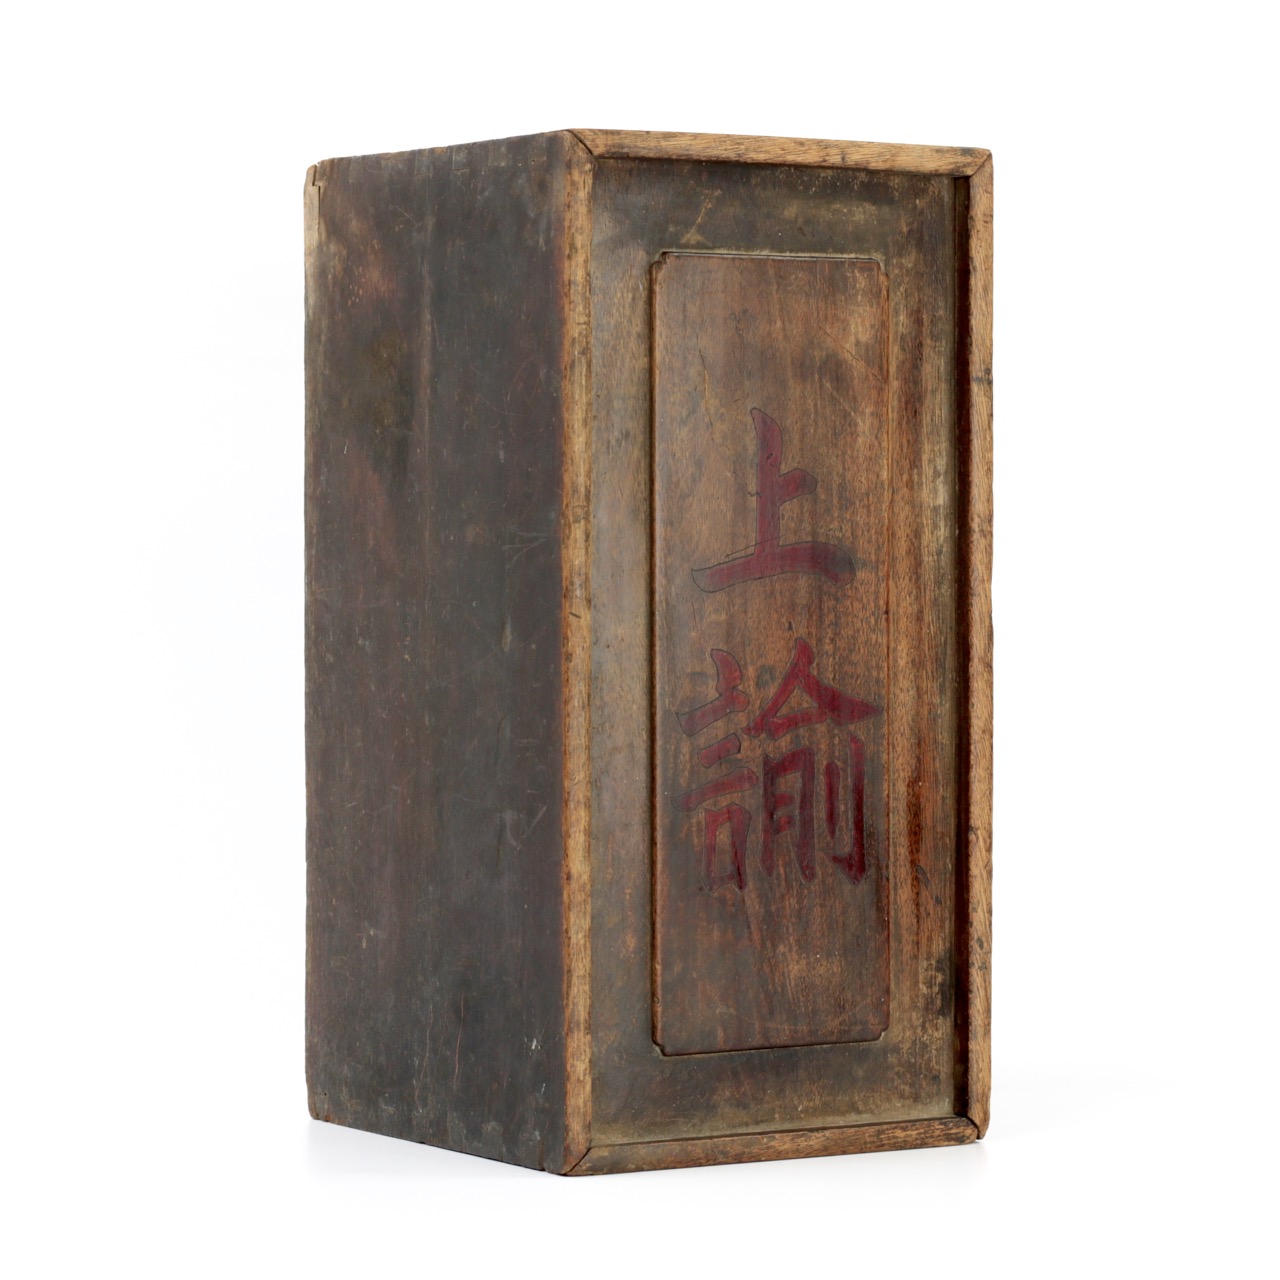 A Qing dynasty imperial edict box